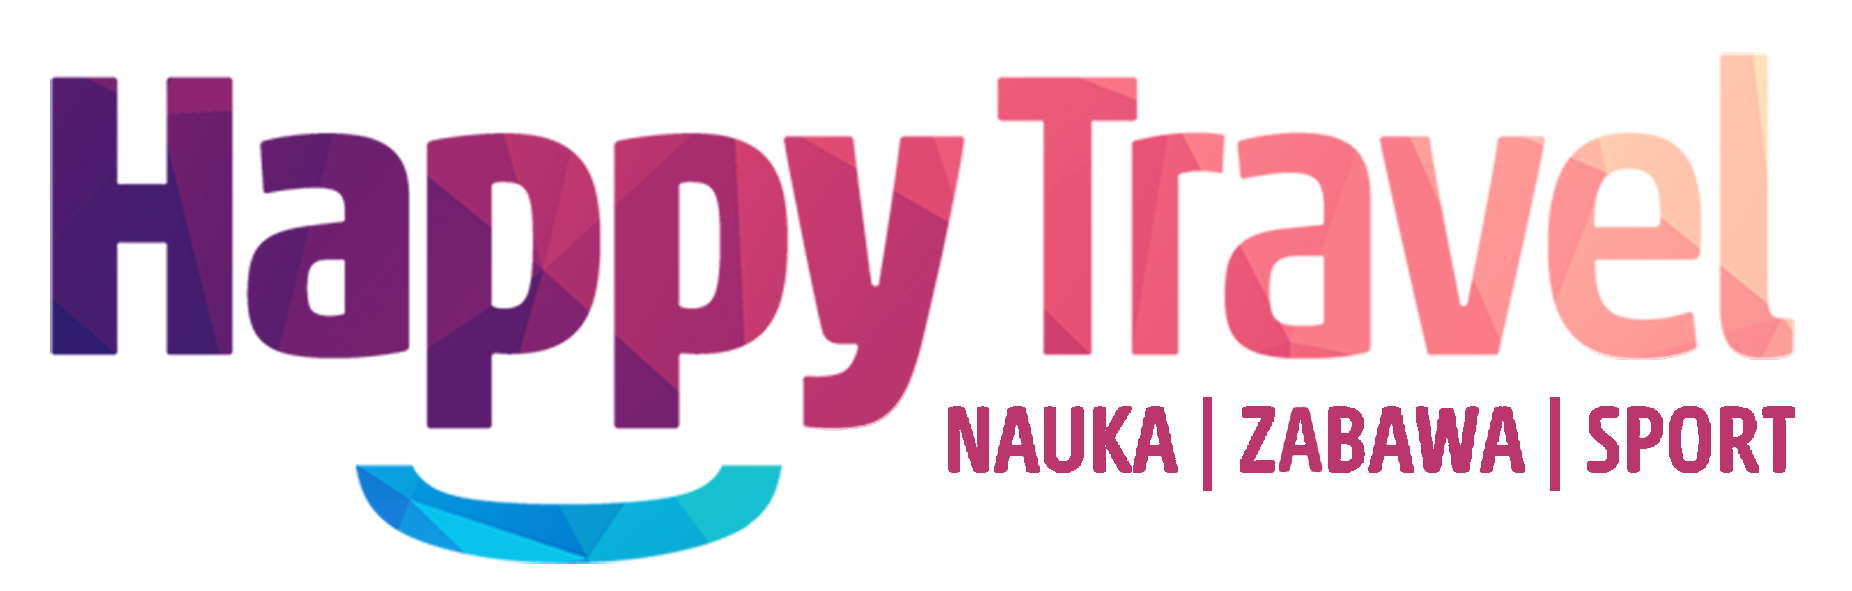 happy_travel_logo.png